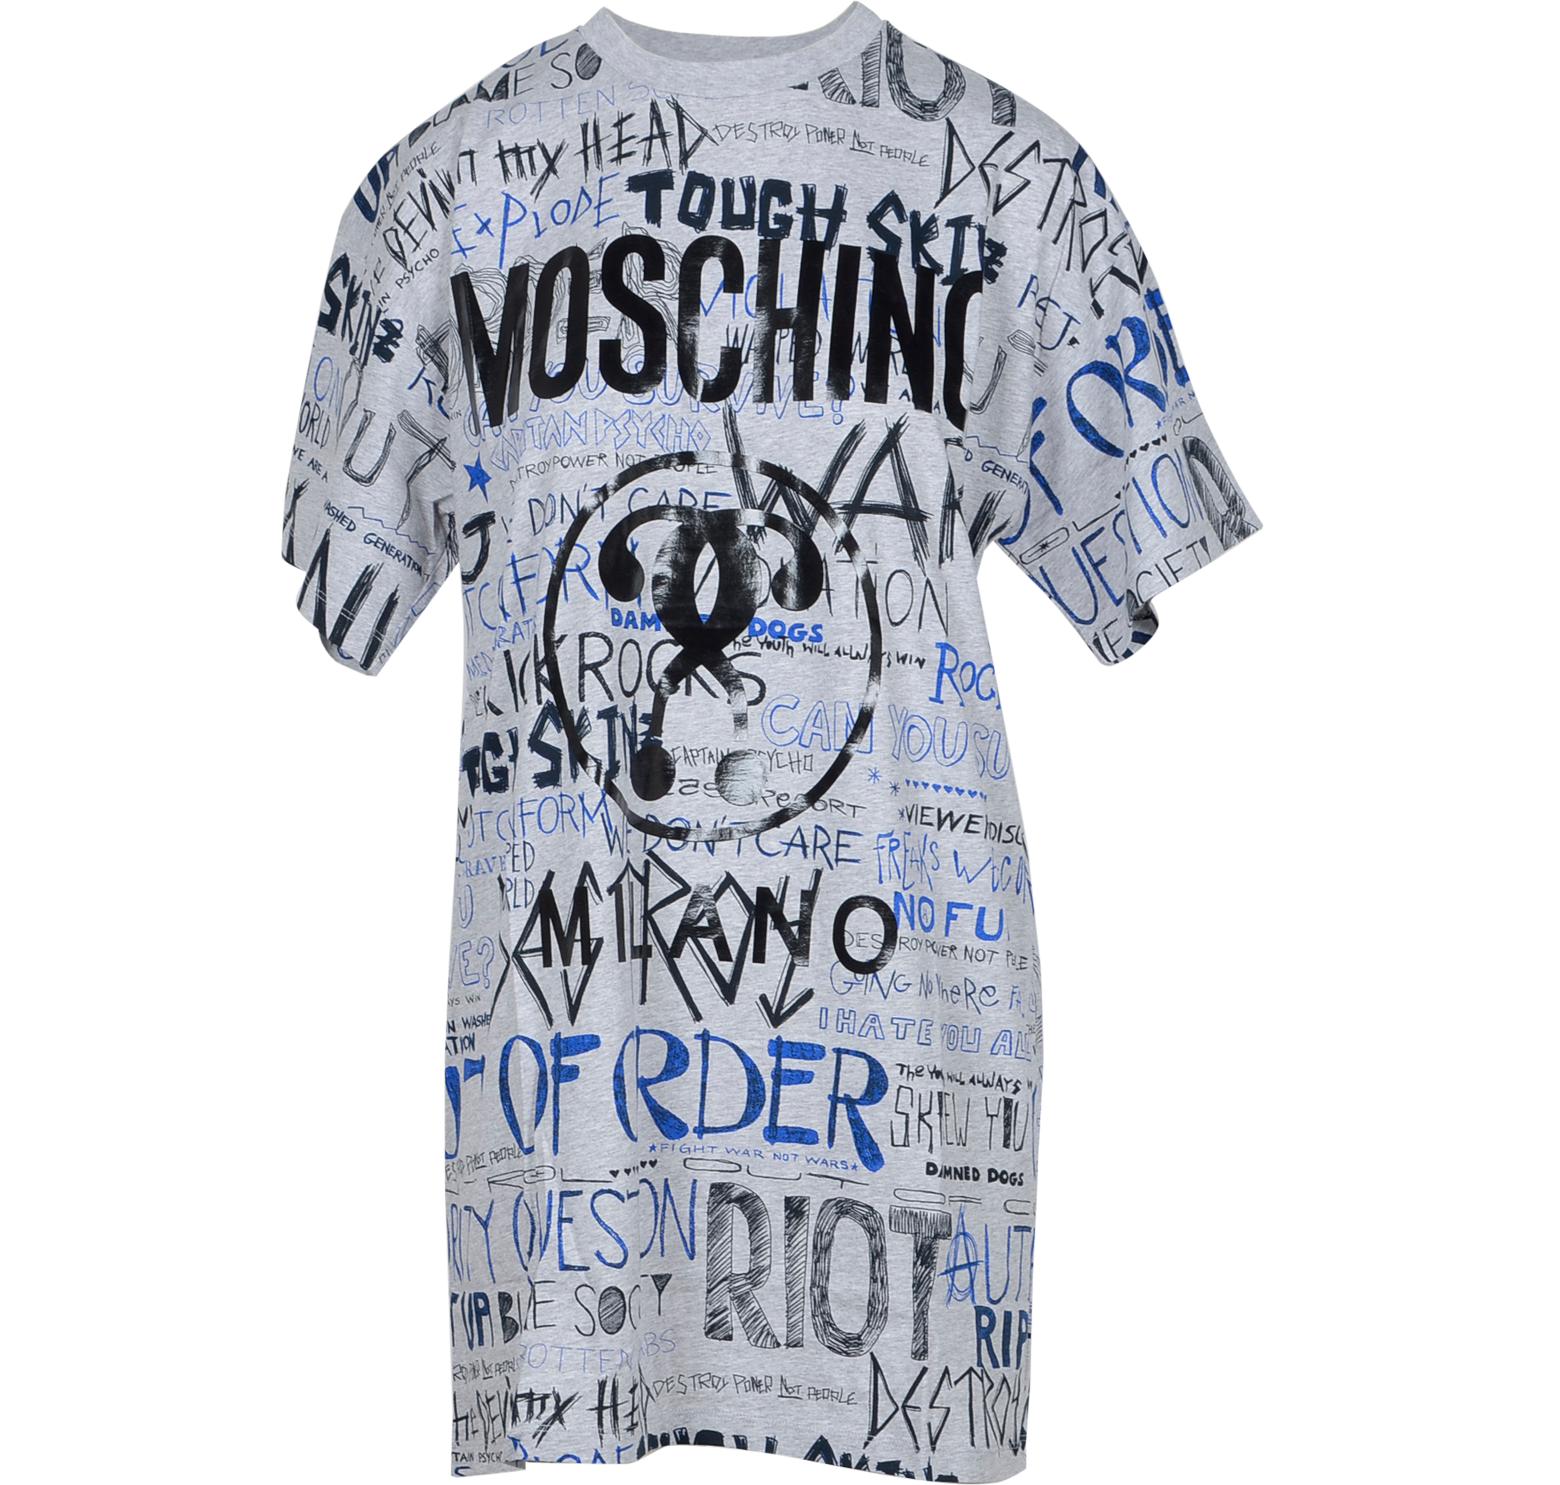 moschino women's t shirt sale